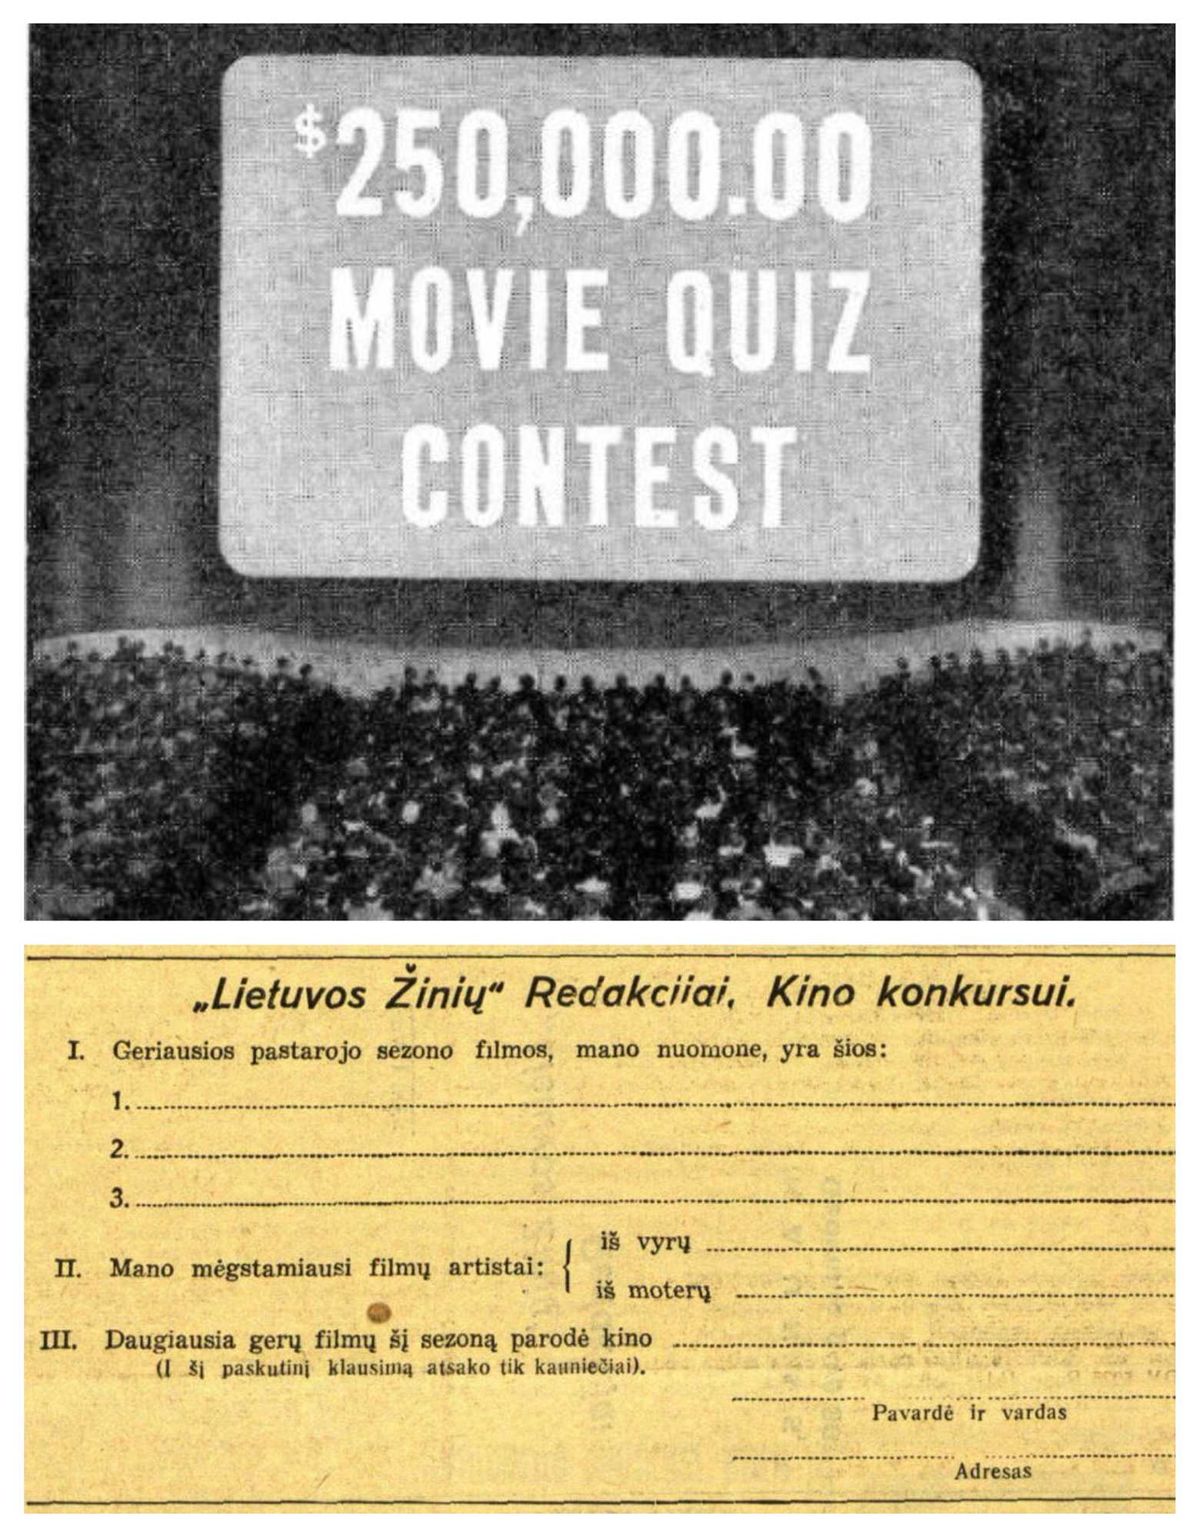 Movie Contests